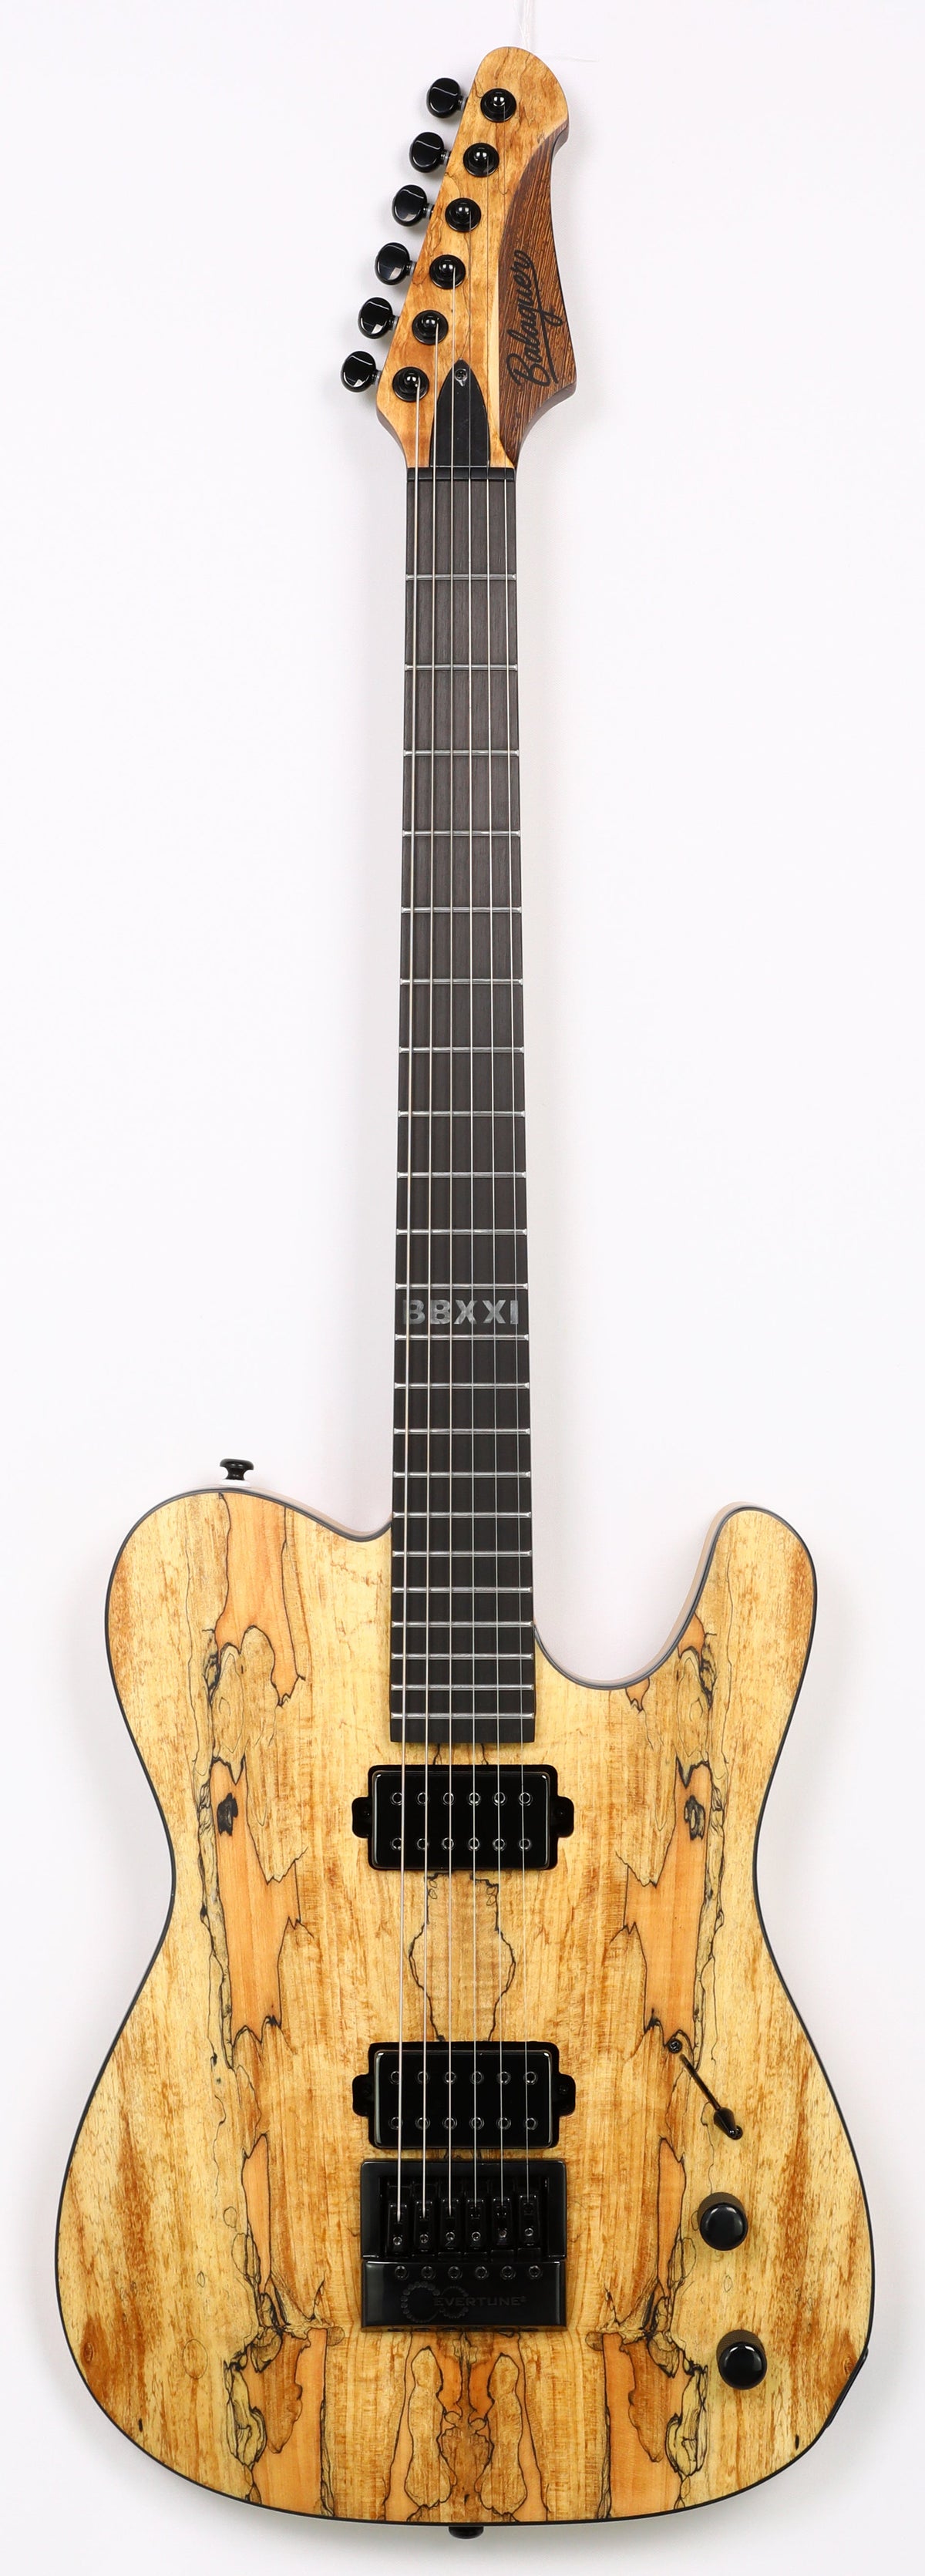 Balaguer Beau Burchell Signature Woodman BB Baritone Electric Guitar w/ Bag